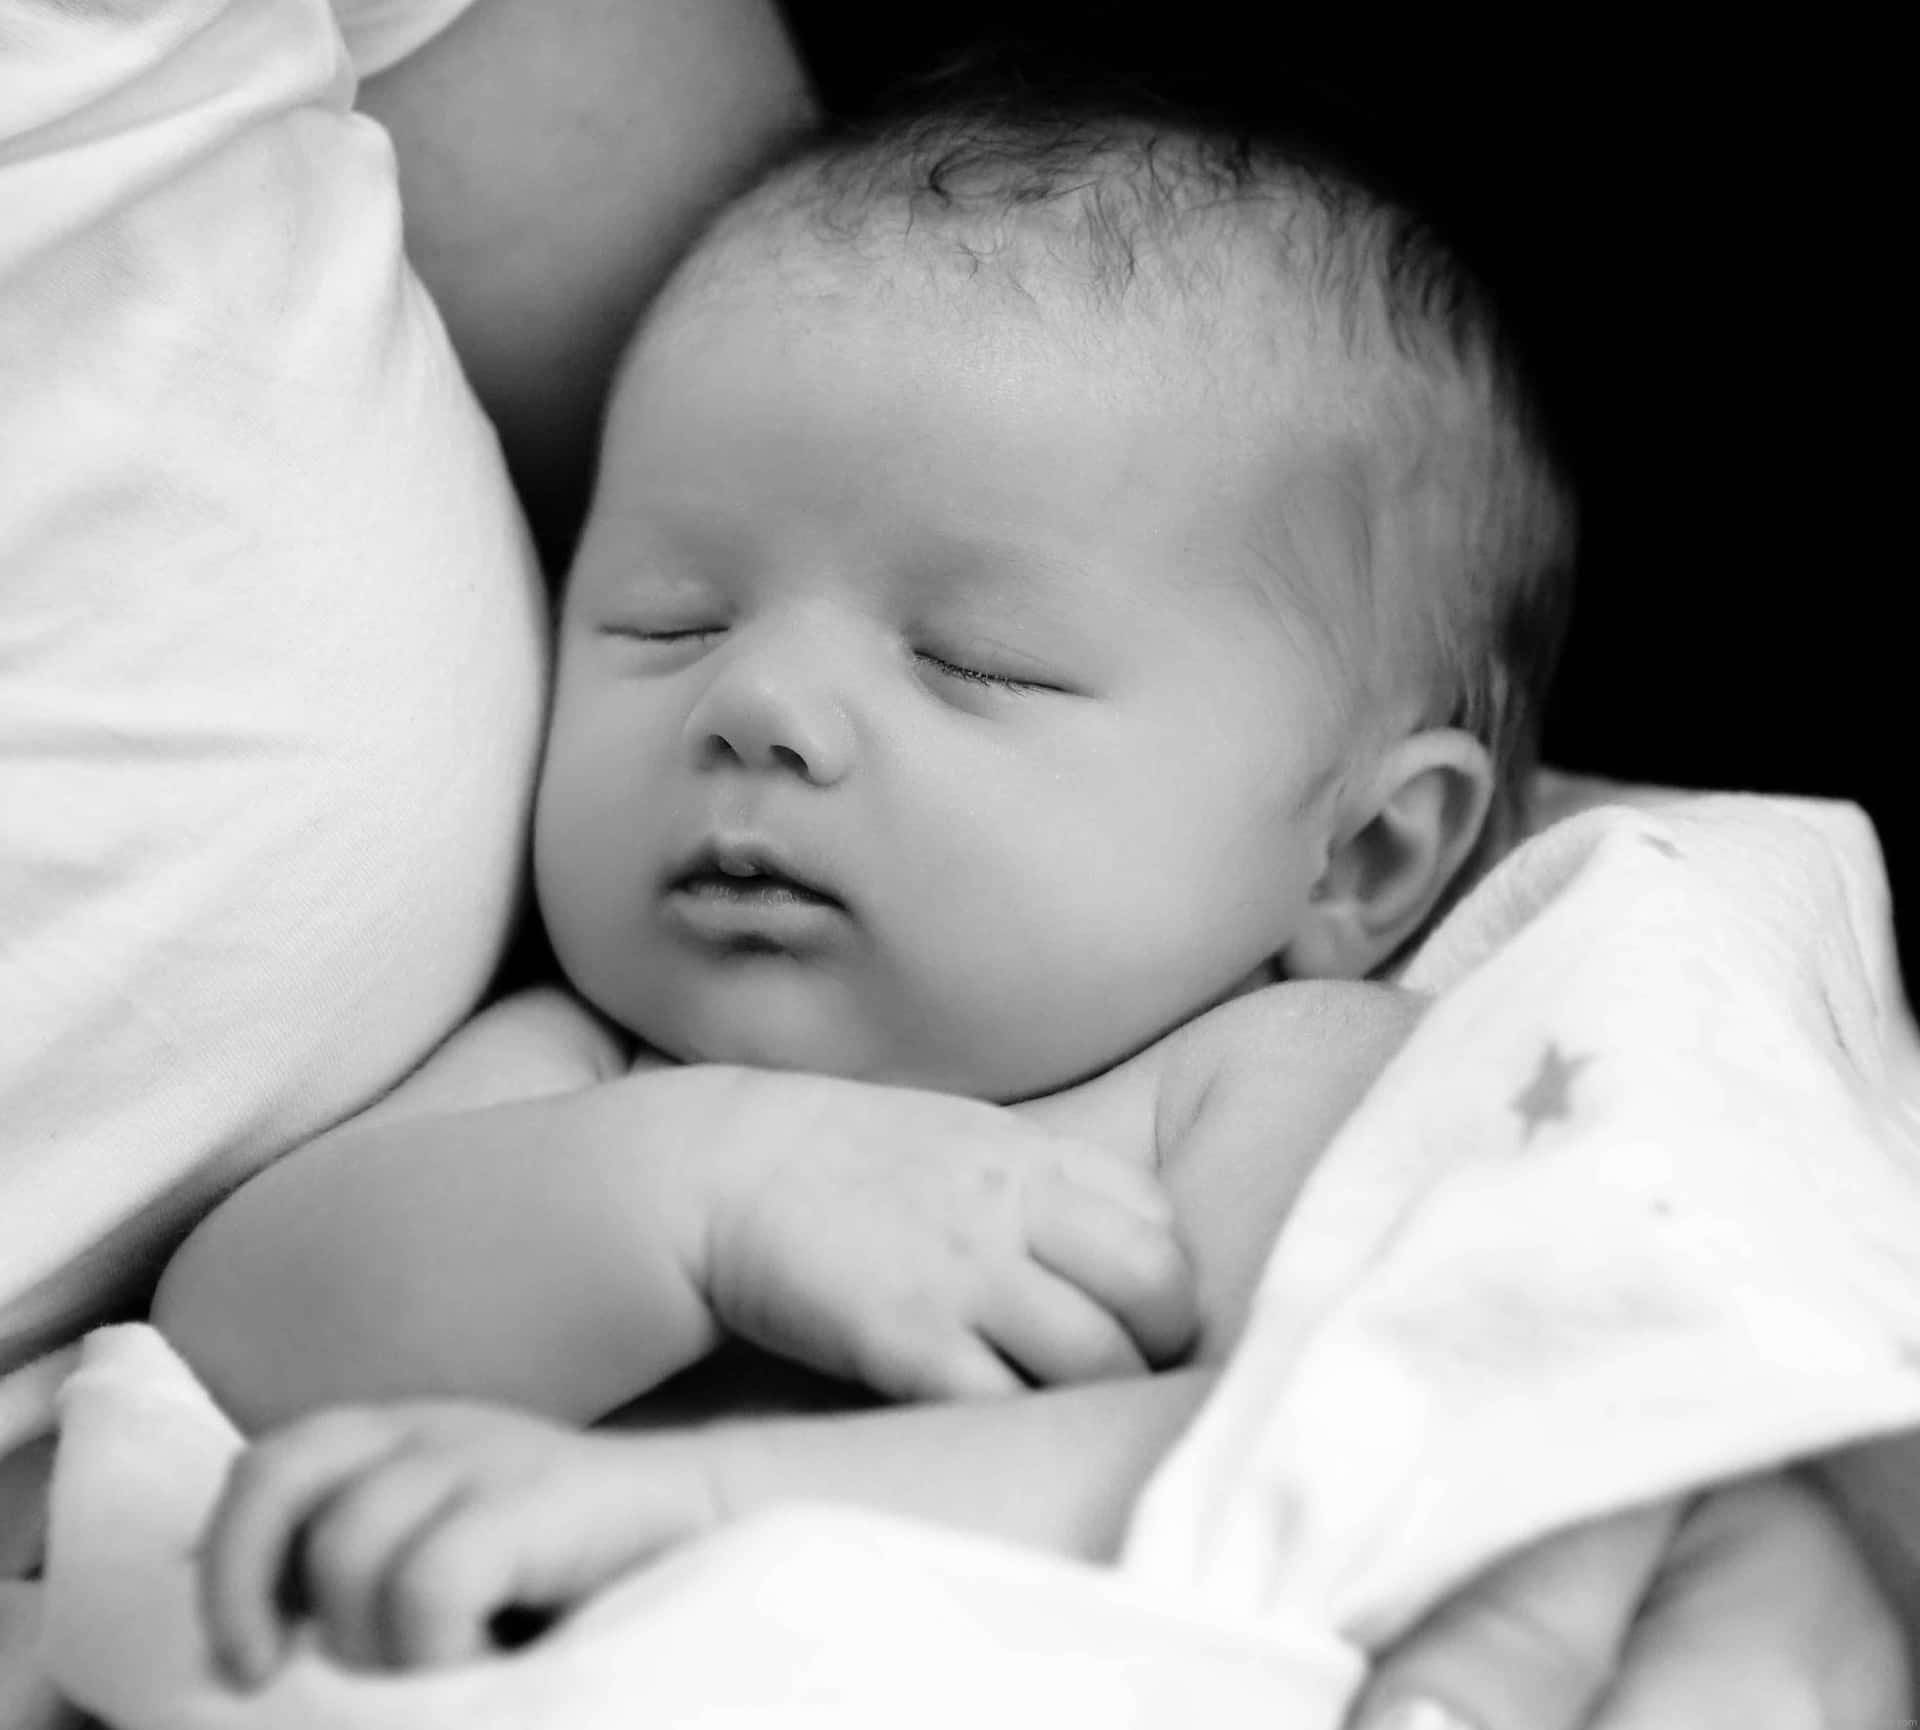 A sweet sleeping infant